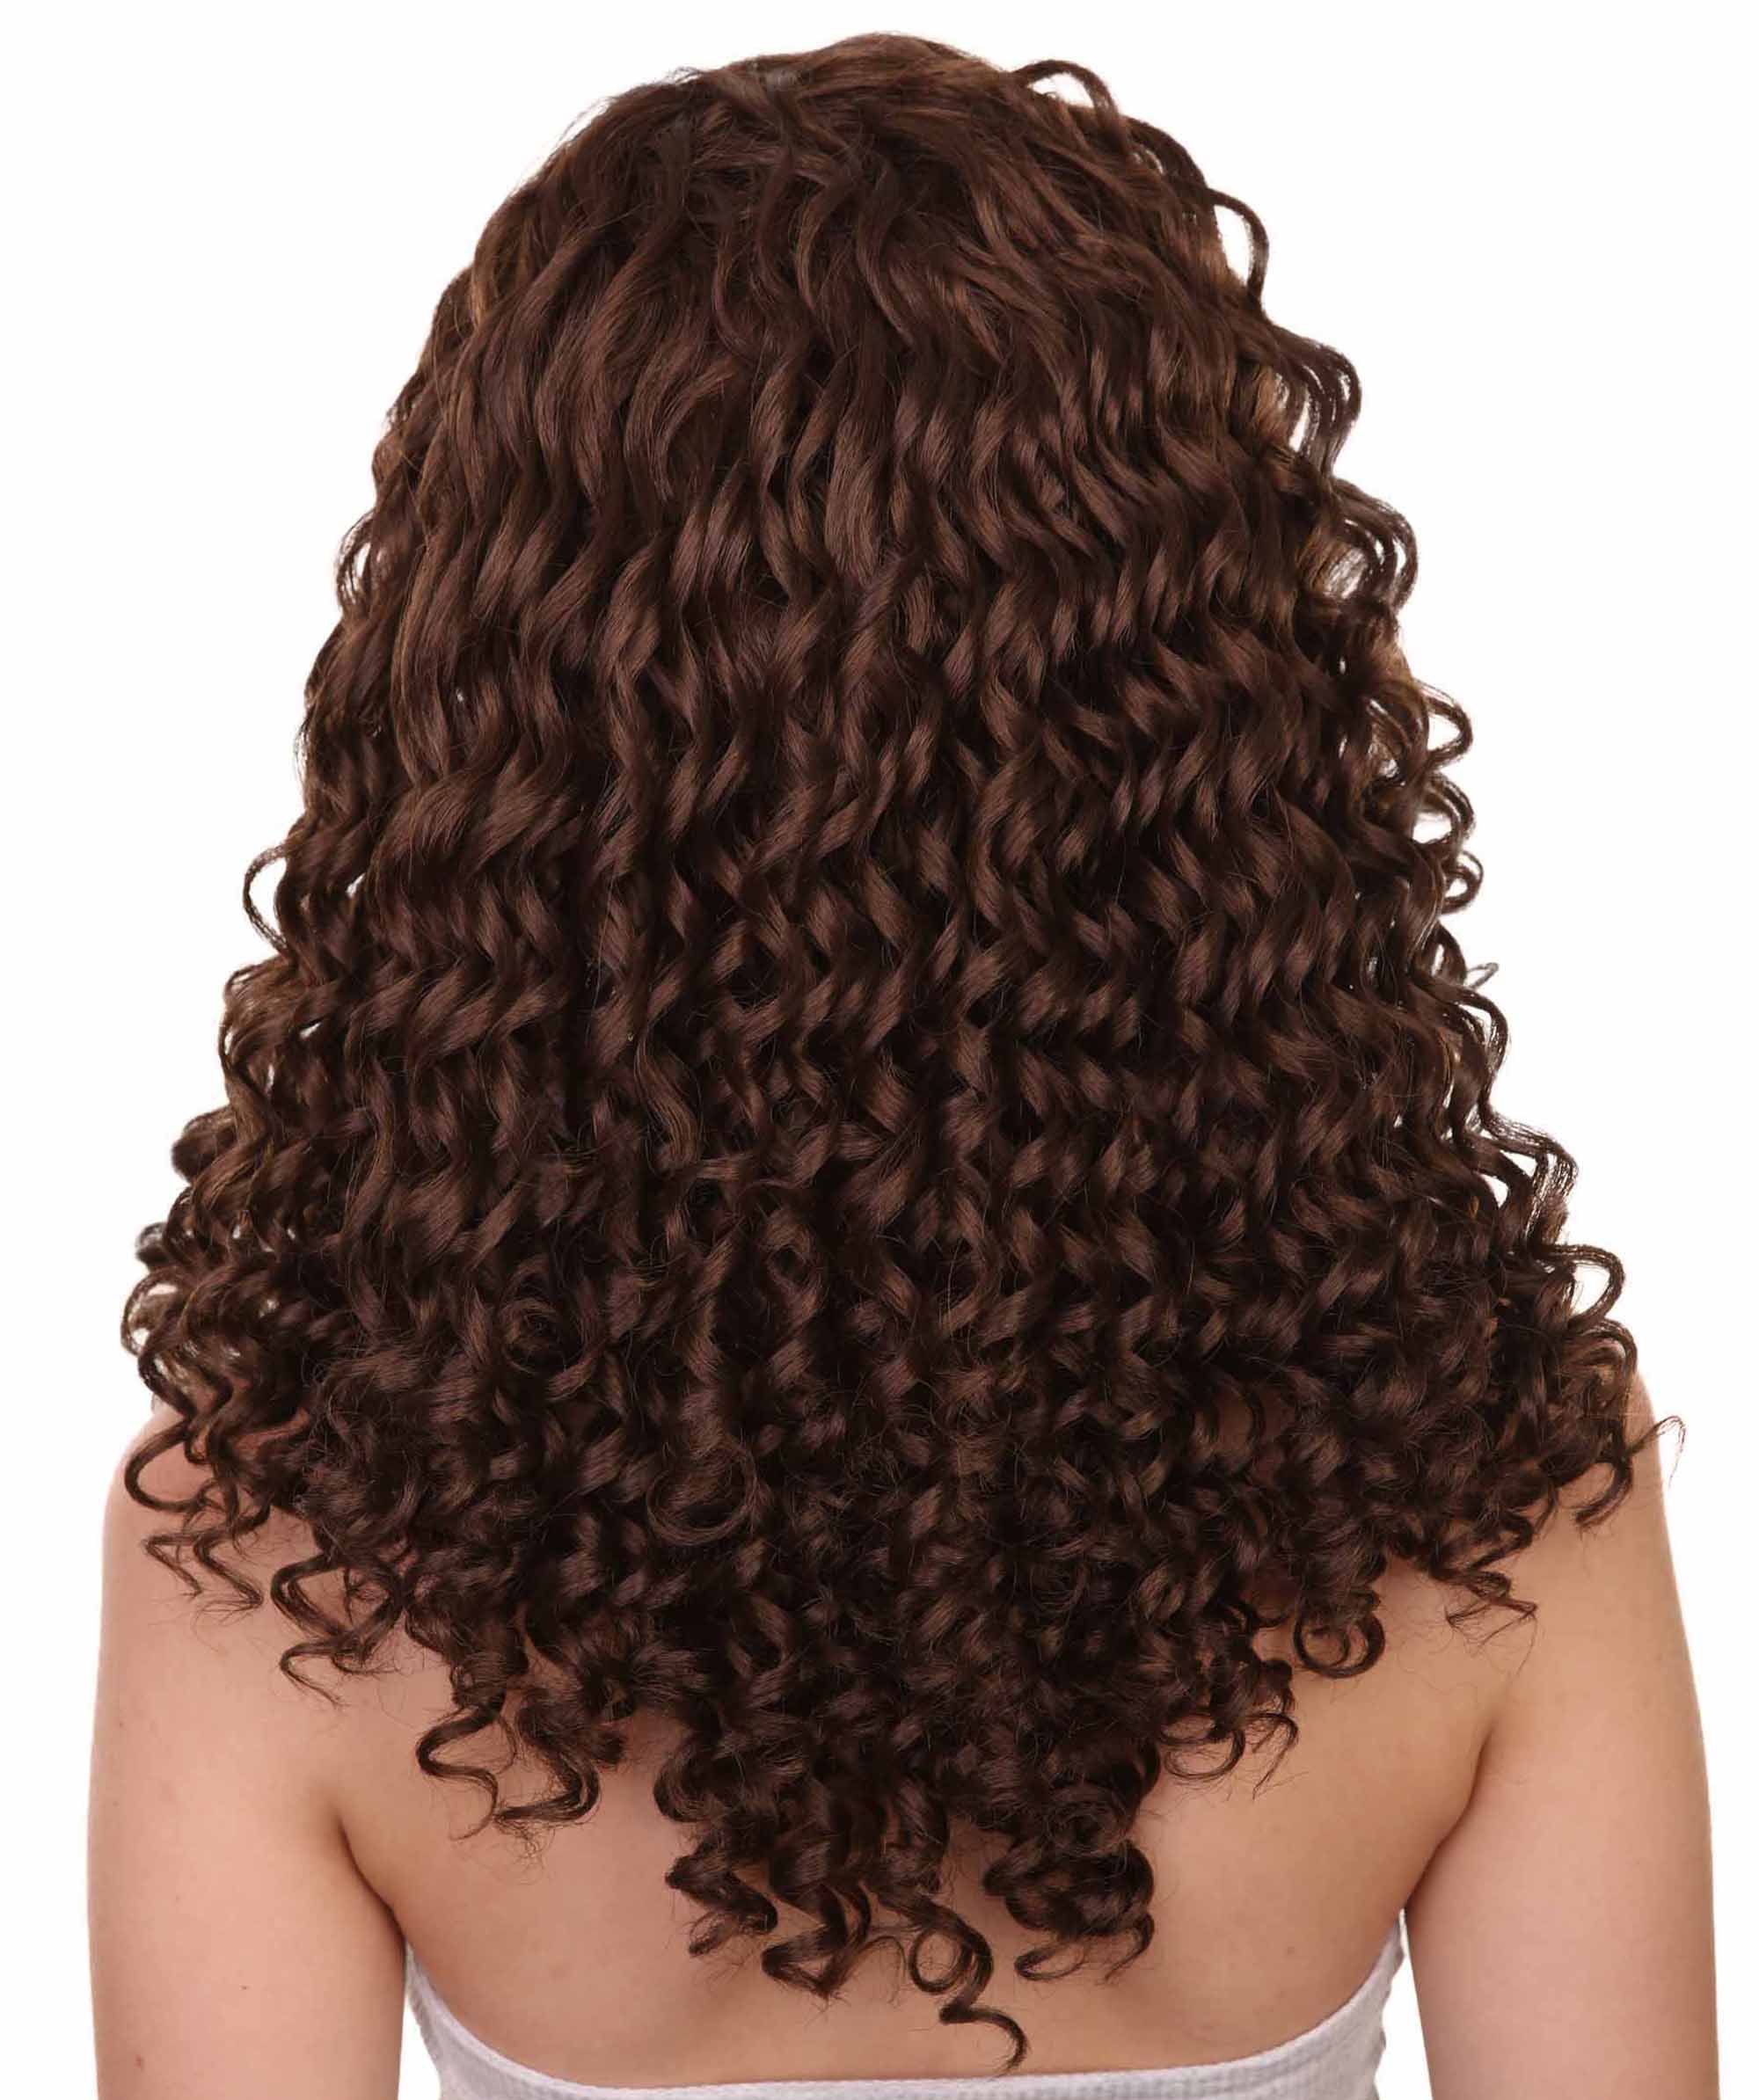 Womens Brown Curly Wig | Medium Cosplay Halloween Wig | Premium Breathable Capless Cap